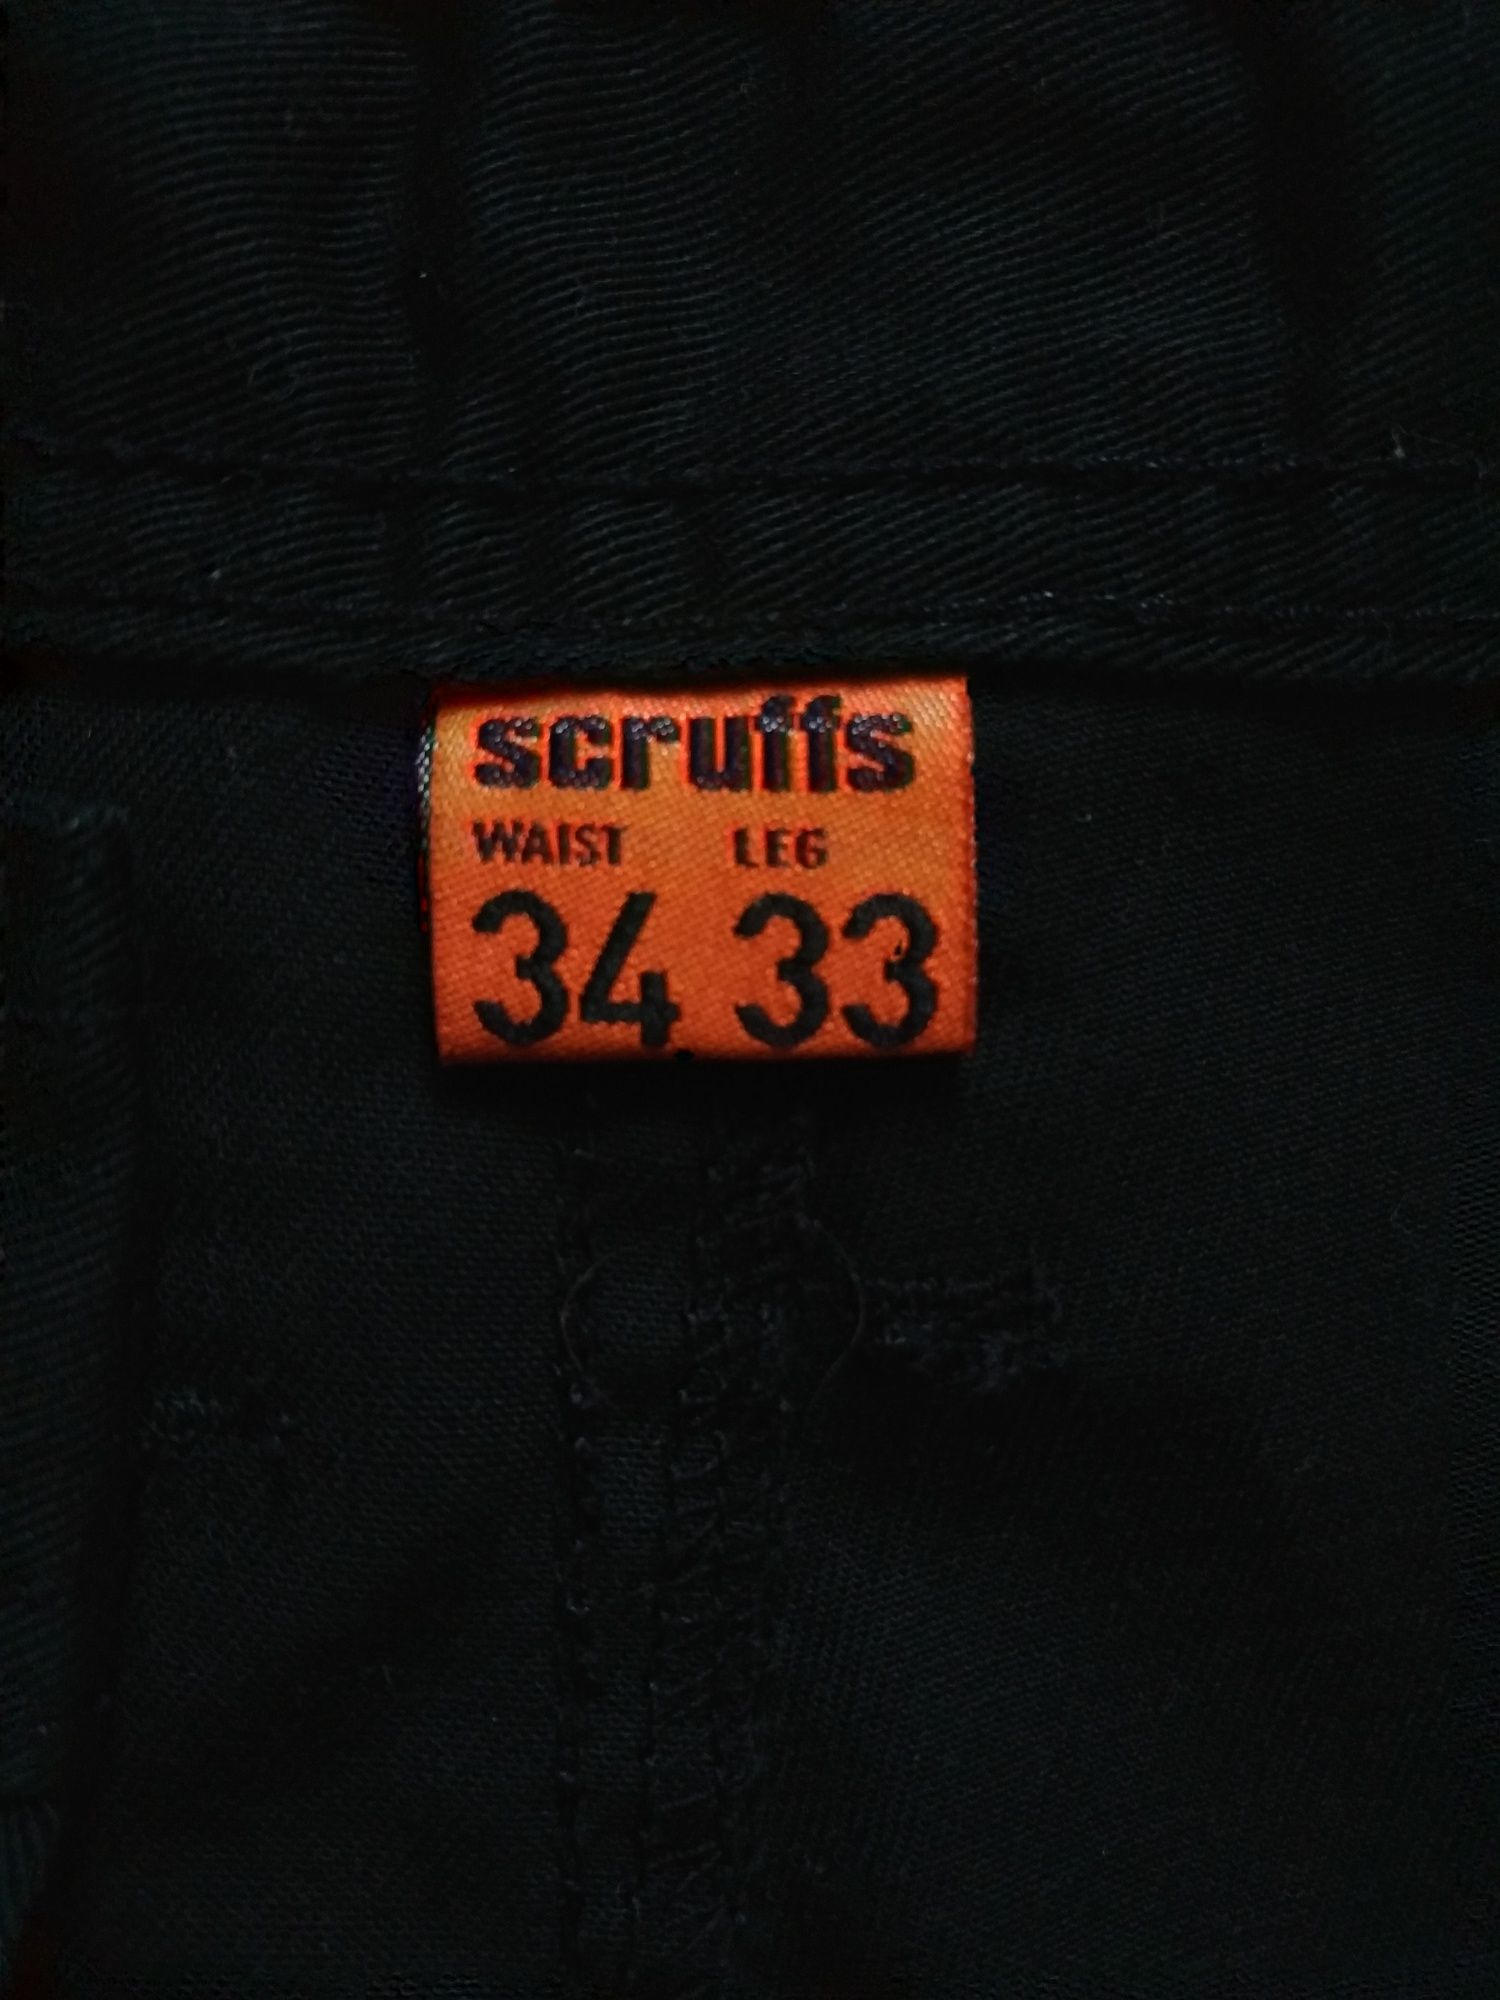 SCRUFFS work wear штаны рабочие размер 34/33, новые